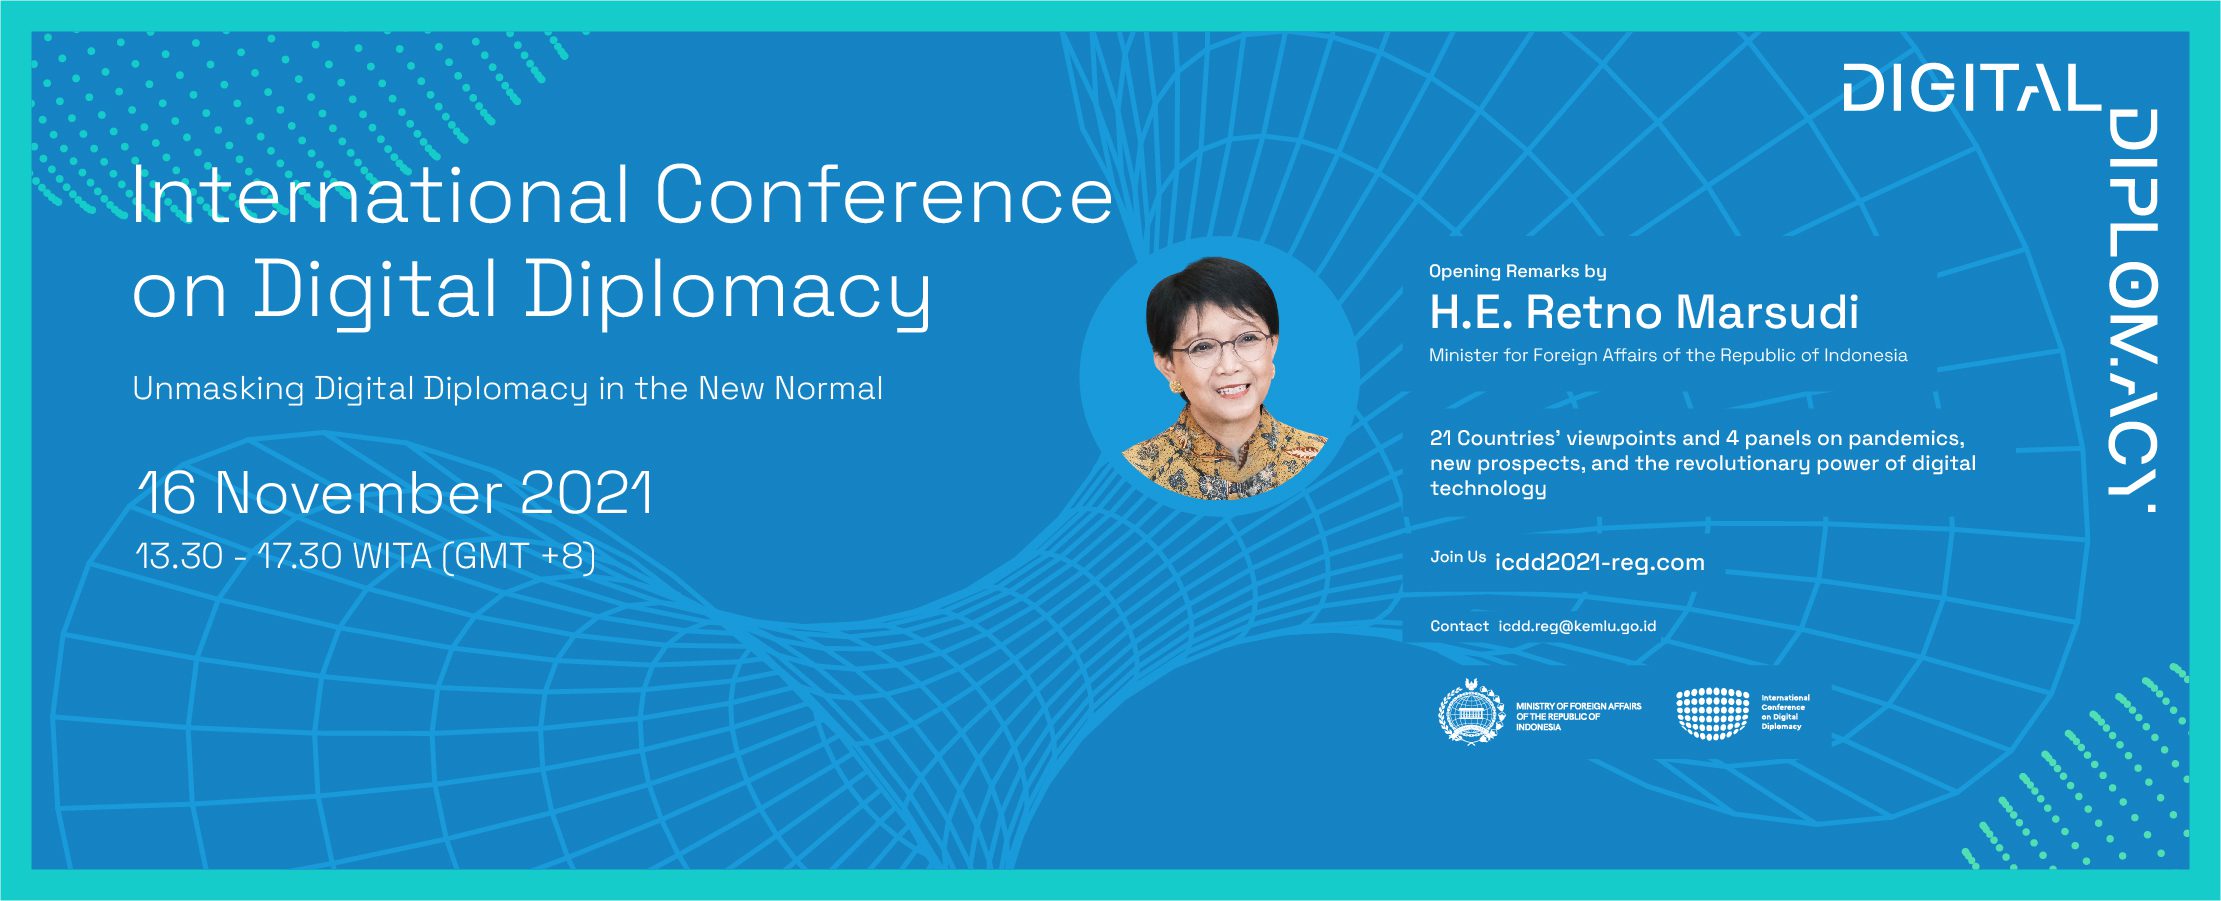 International Conference on Digital Diplomacy